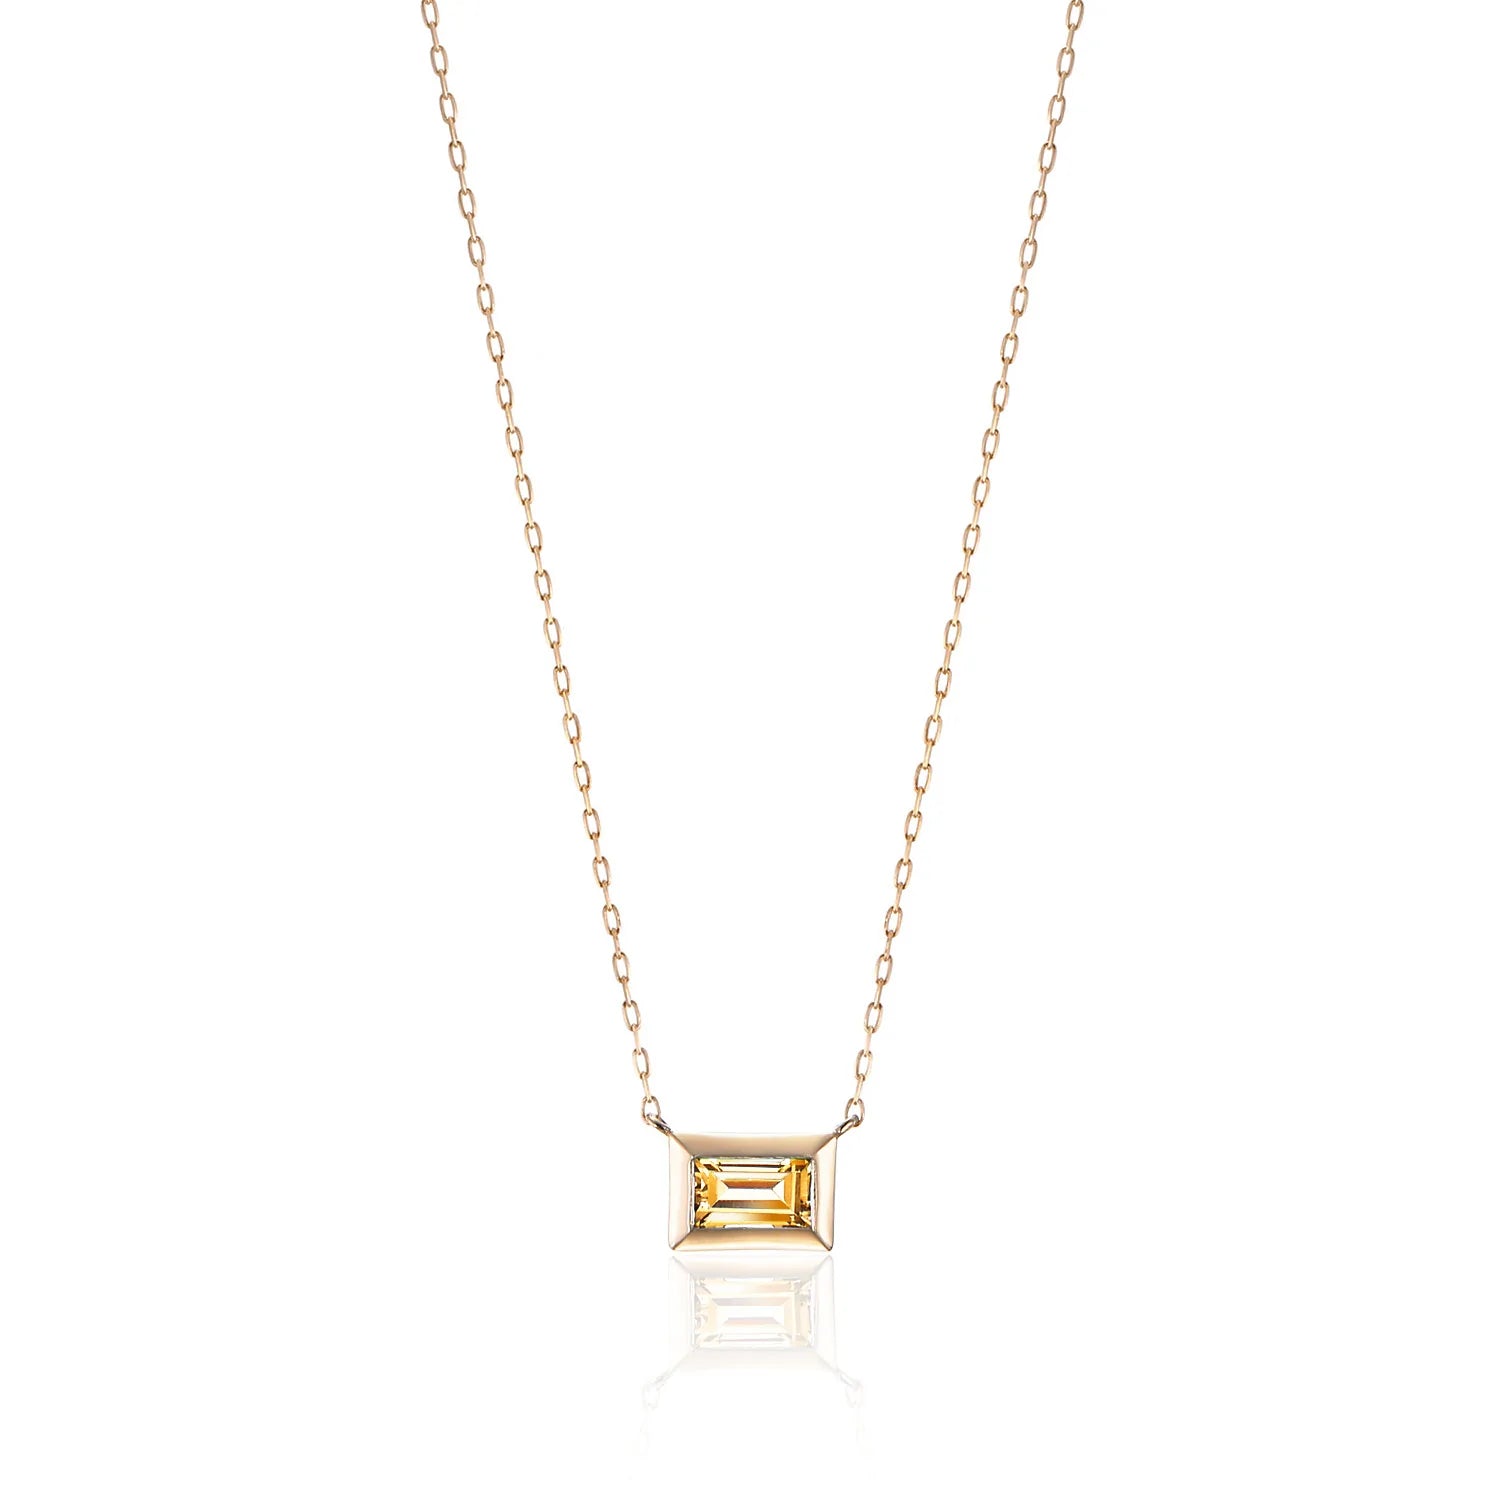 10Kゴールド バゲットカットネックレス シトリン | Aletta Jewelry